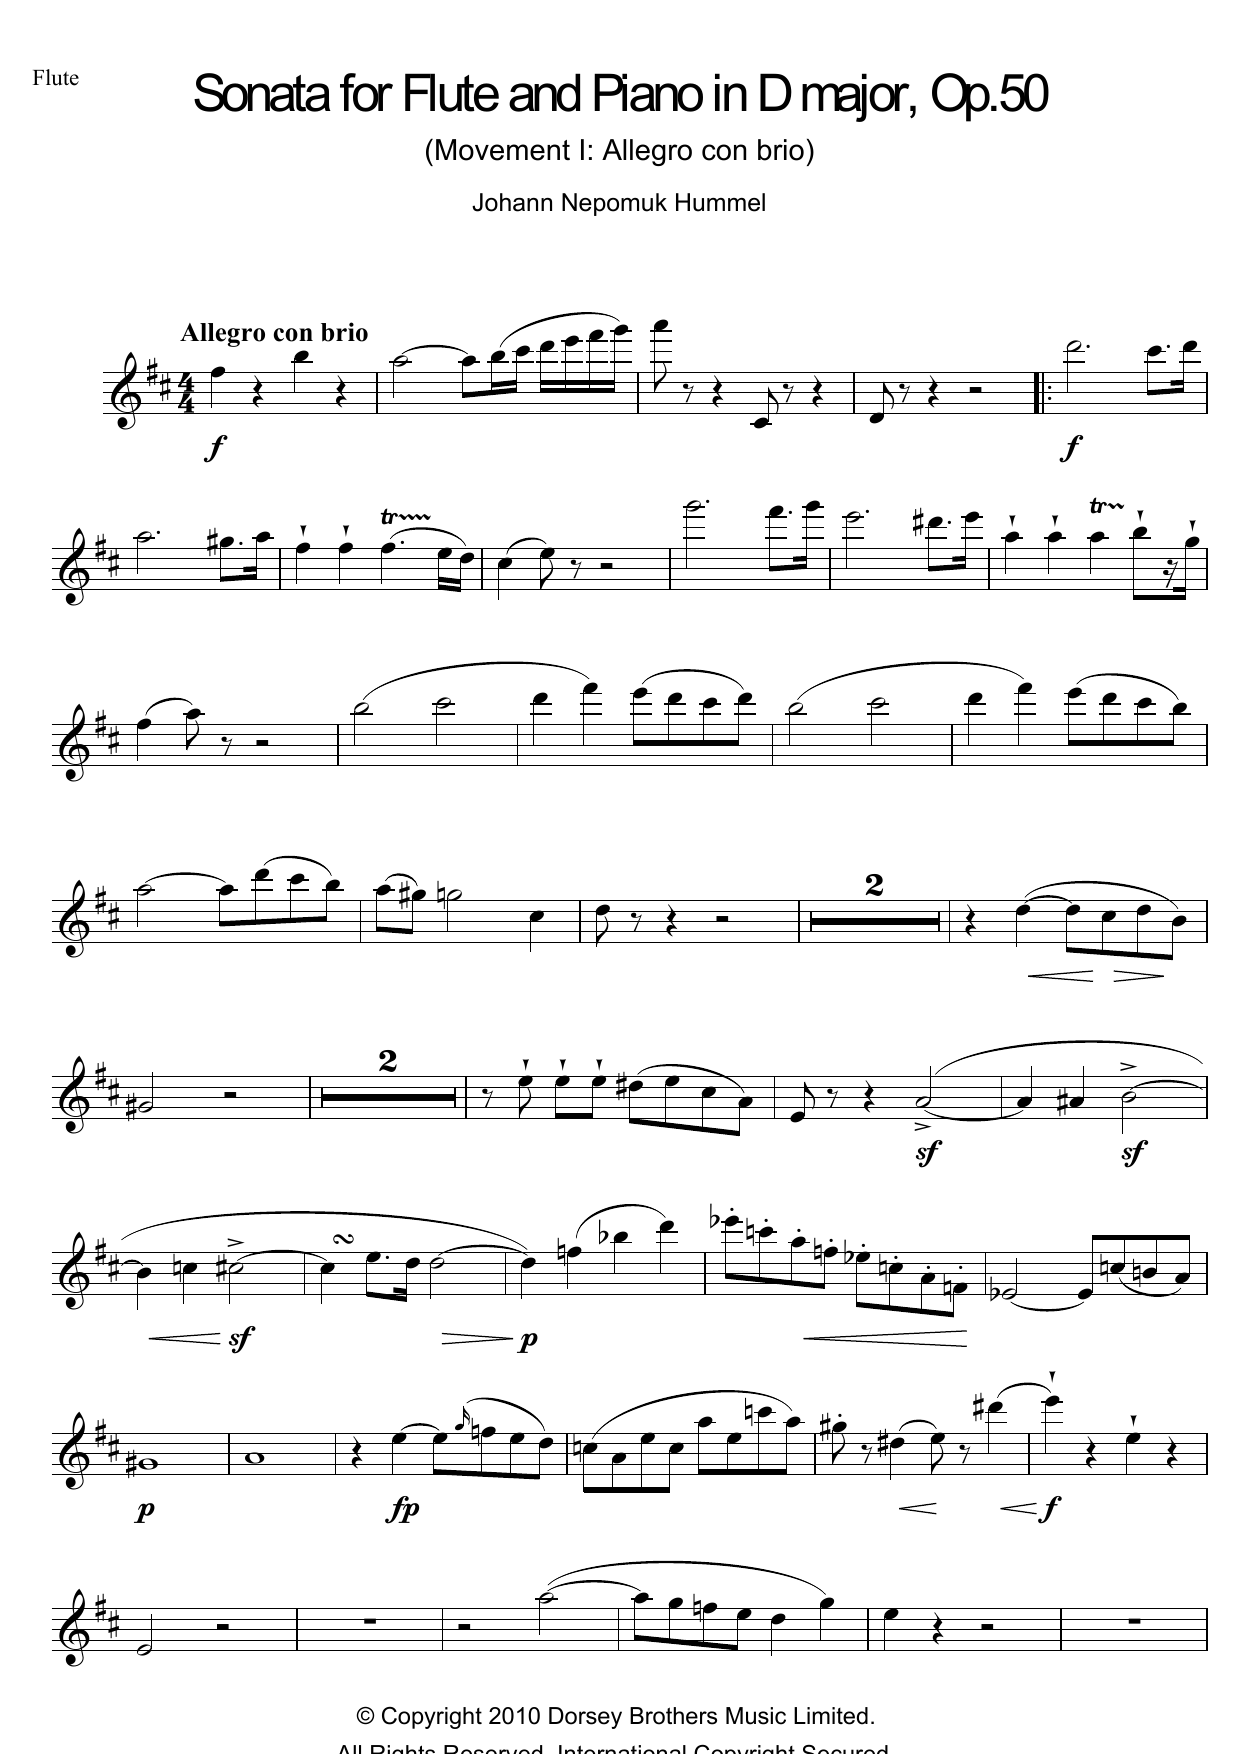 Download Johann Nepomuk Hummel Sonata For Flute And Piano In D Major, Sheet Music